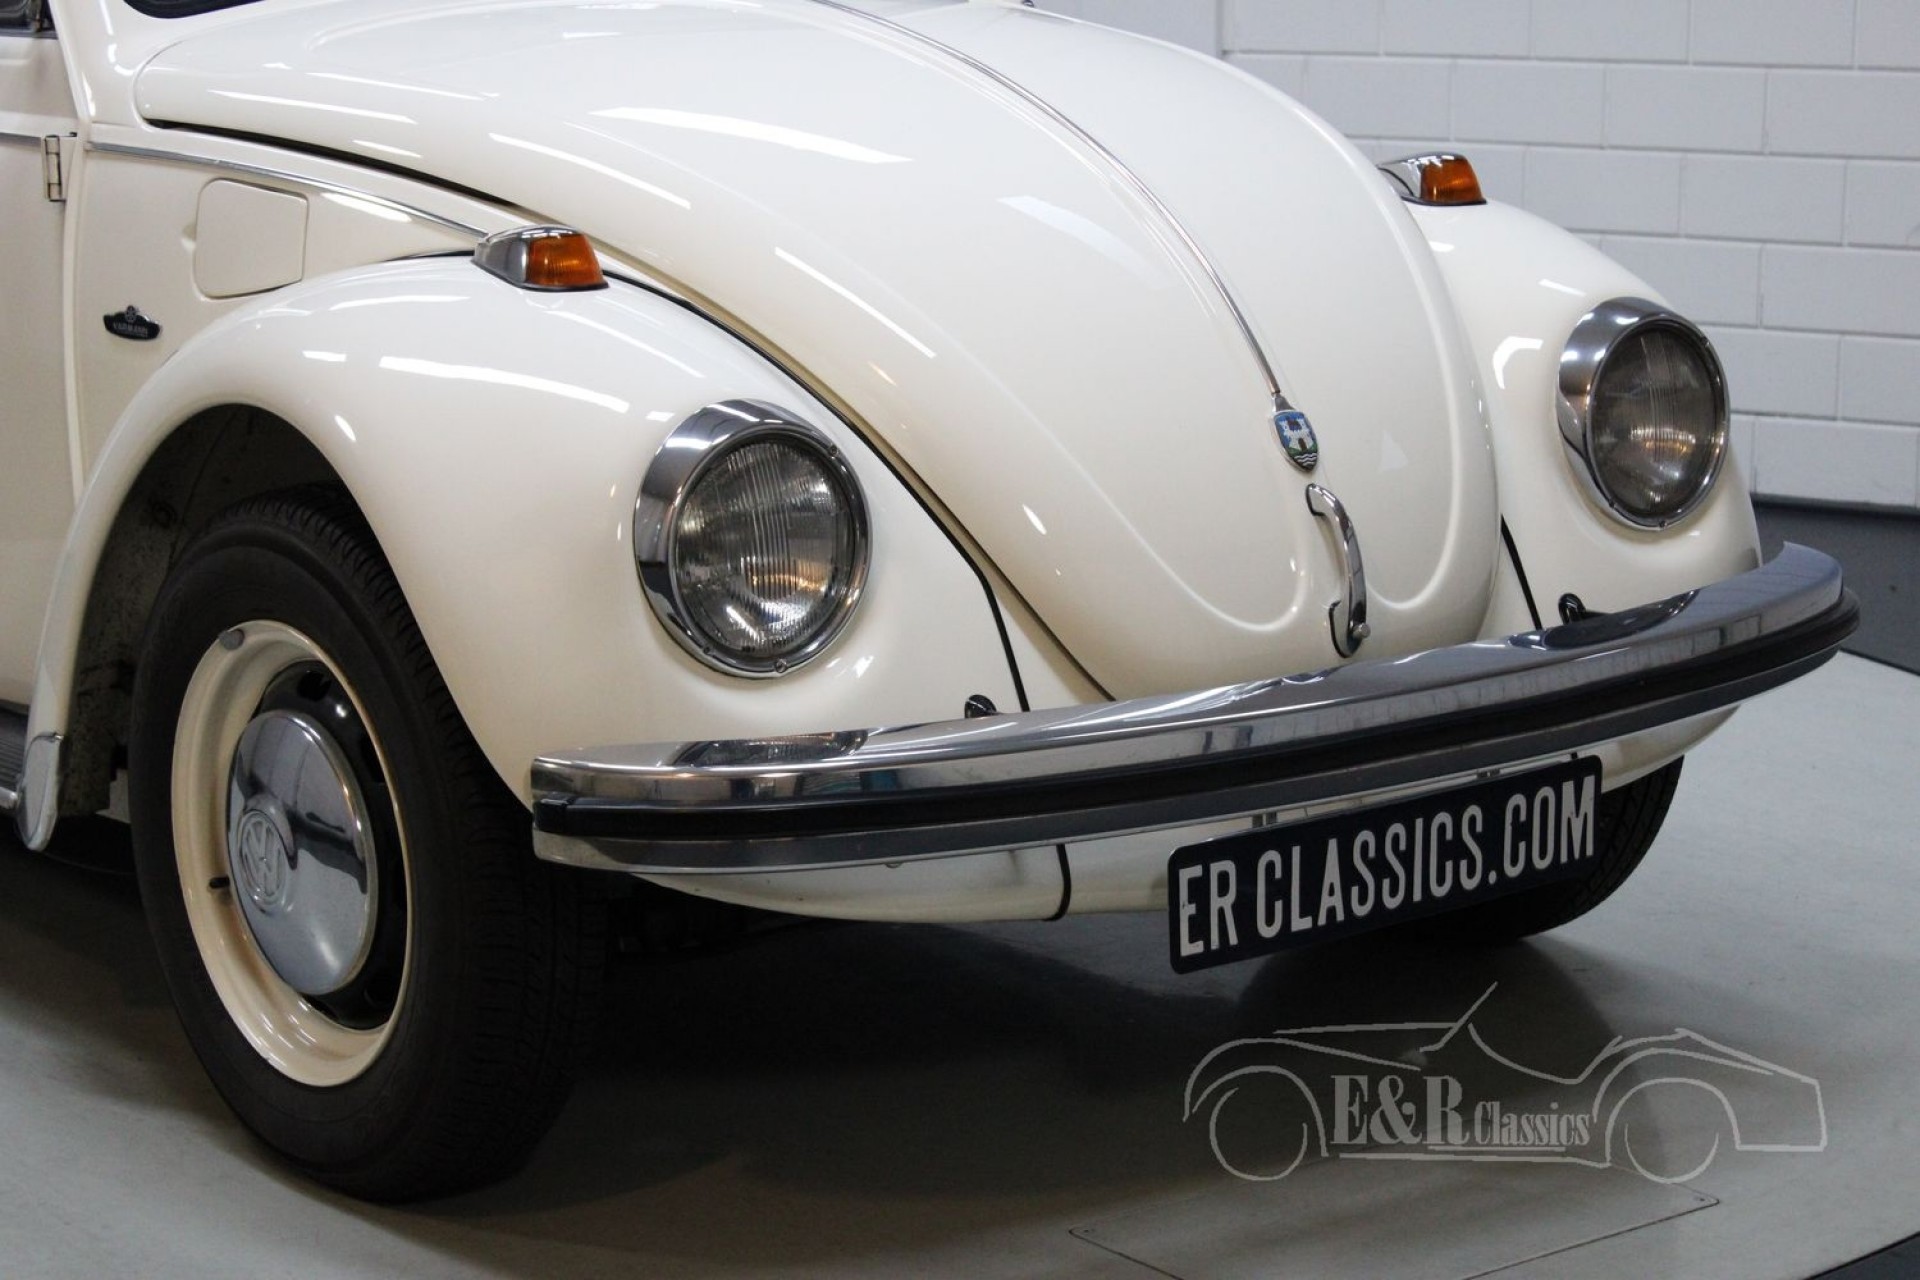 Volkswagen Beetle na sprzedaż w ERclassics